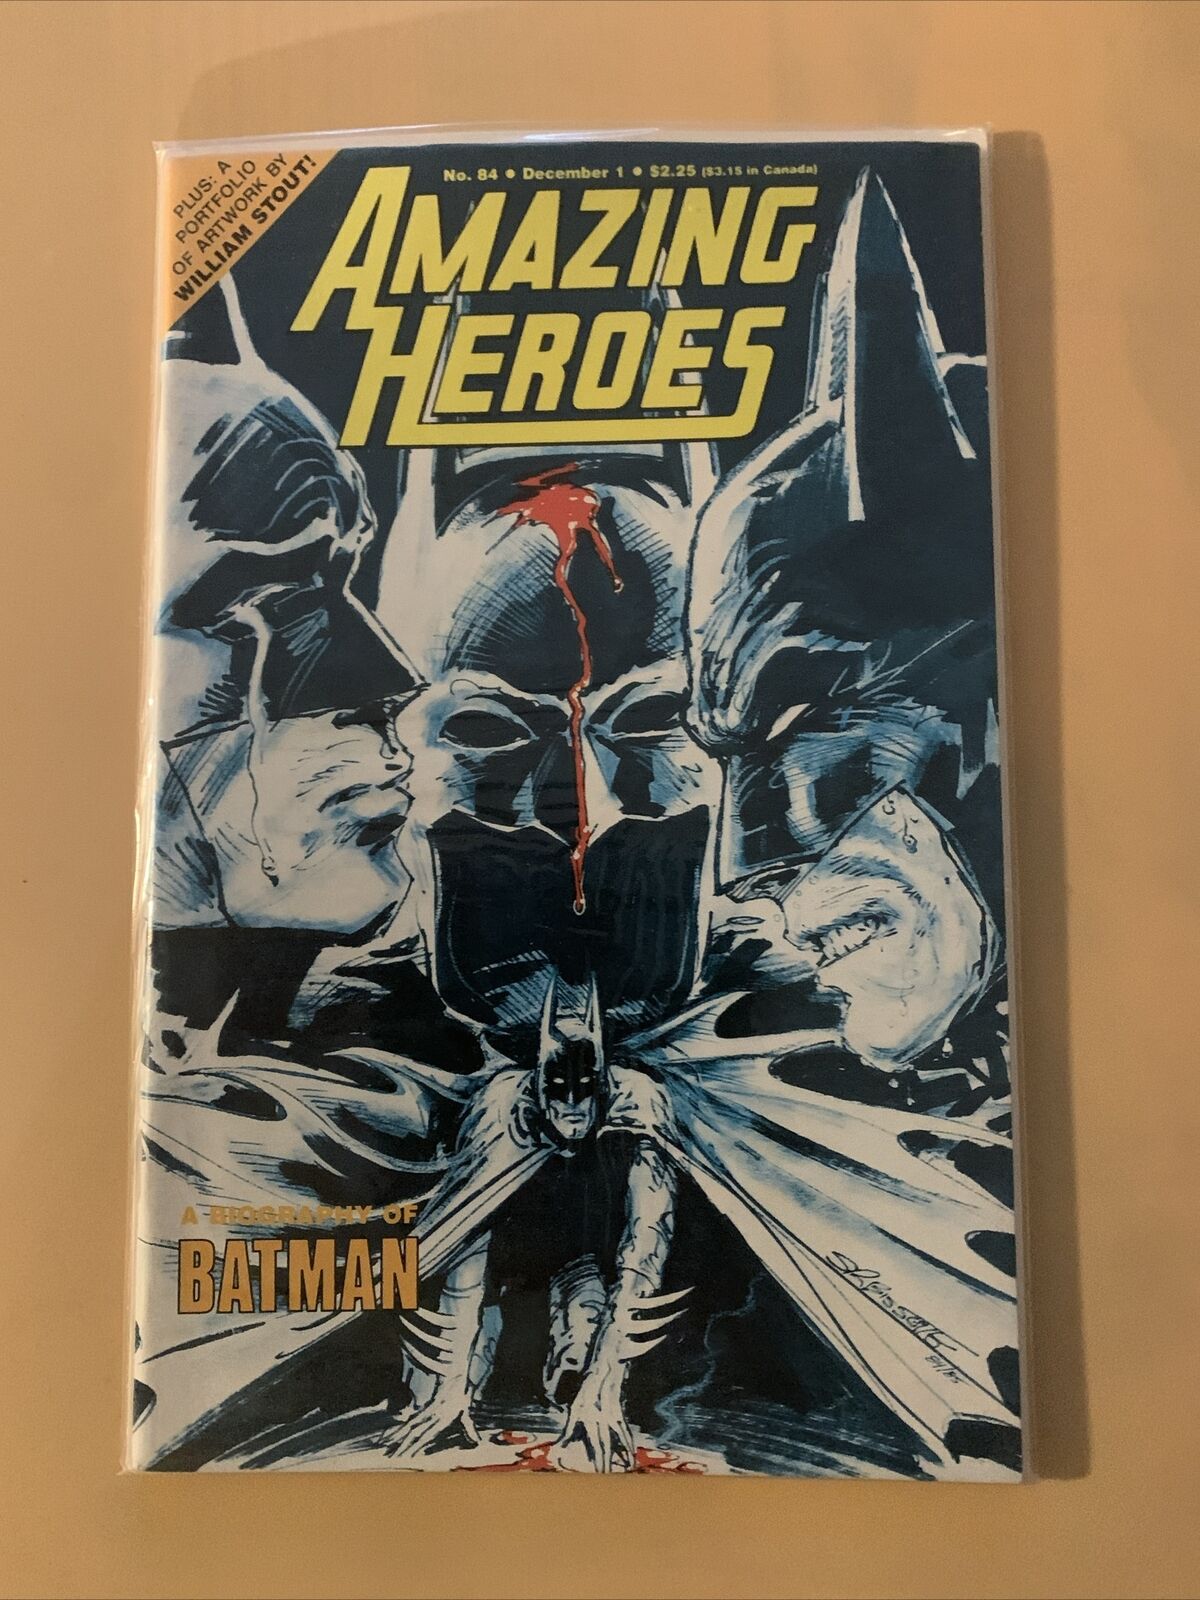 Amazing Heroes 84, Killer Steve Bissette Batman cover HTF uncirculated 1985